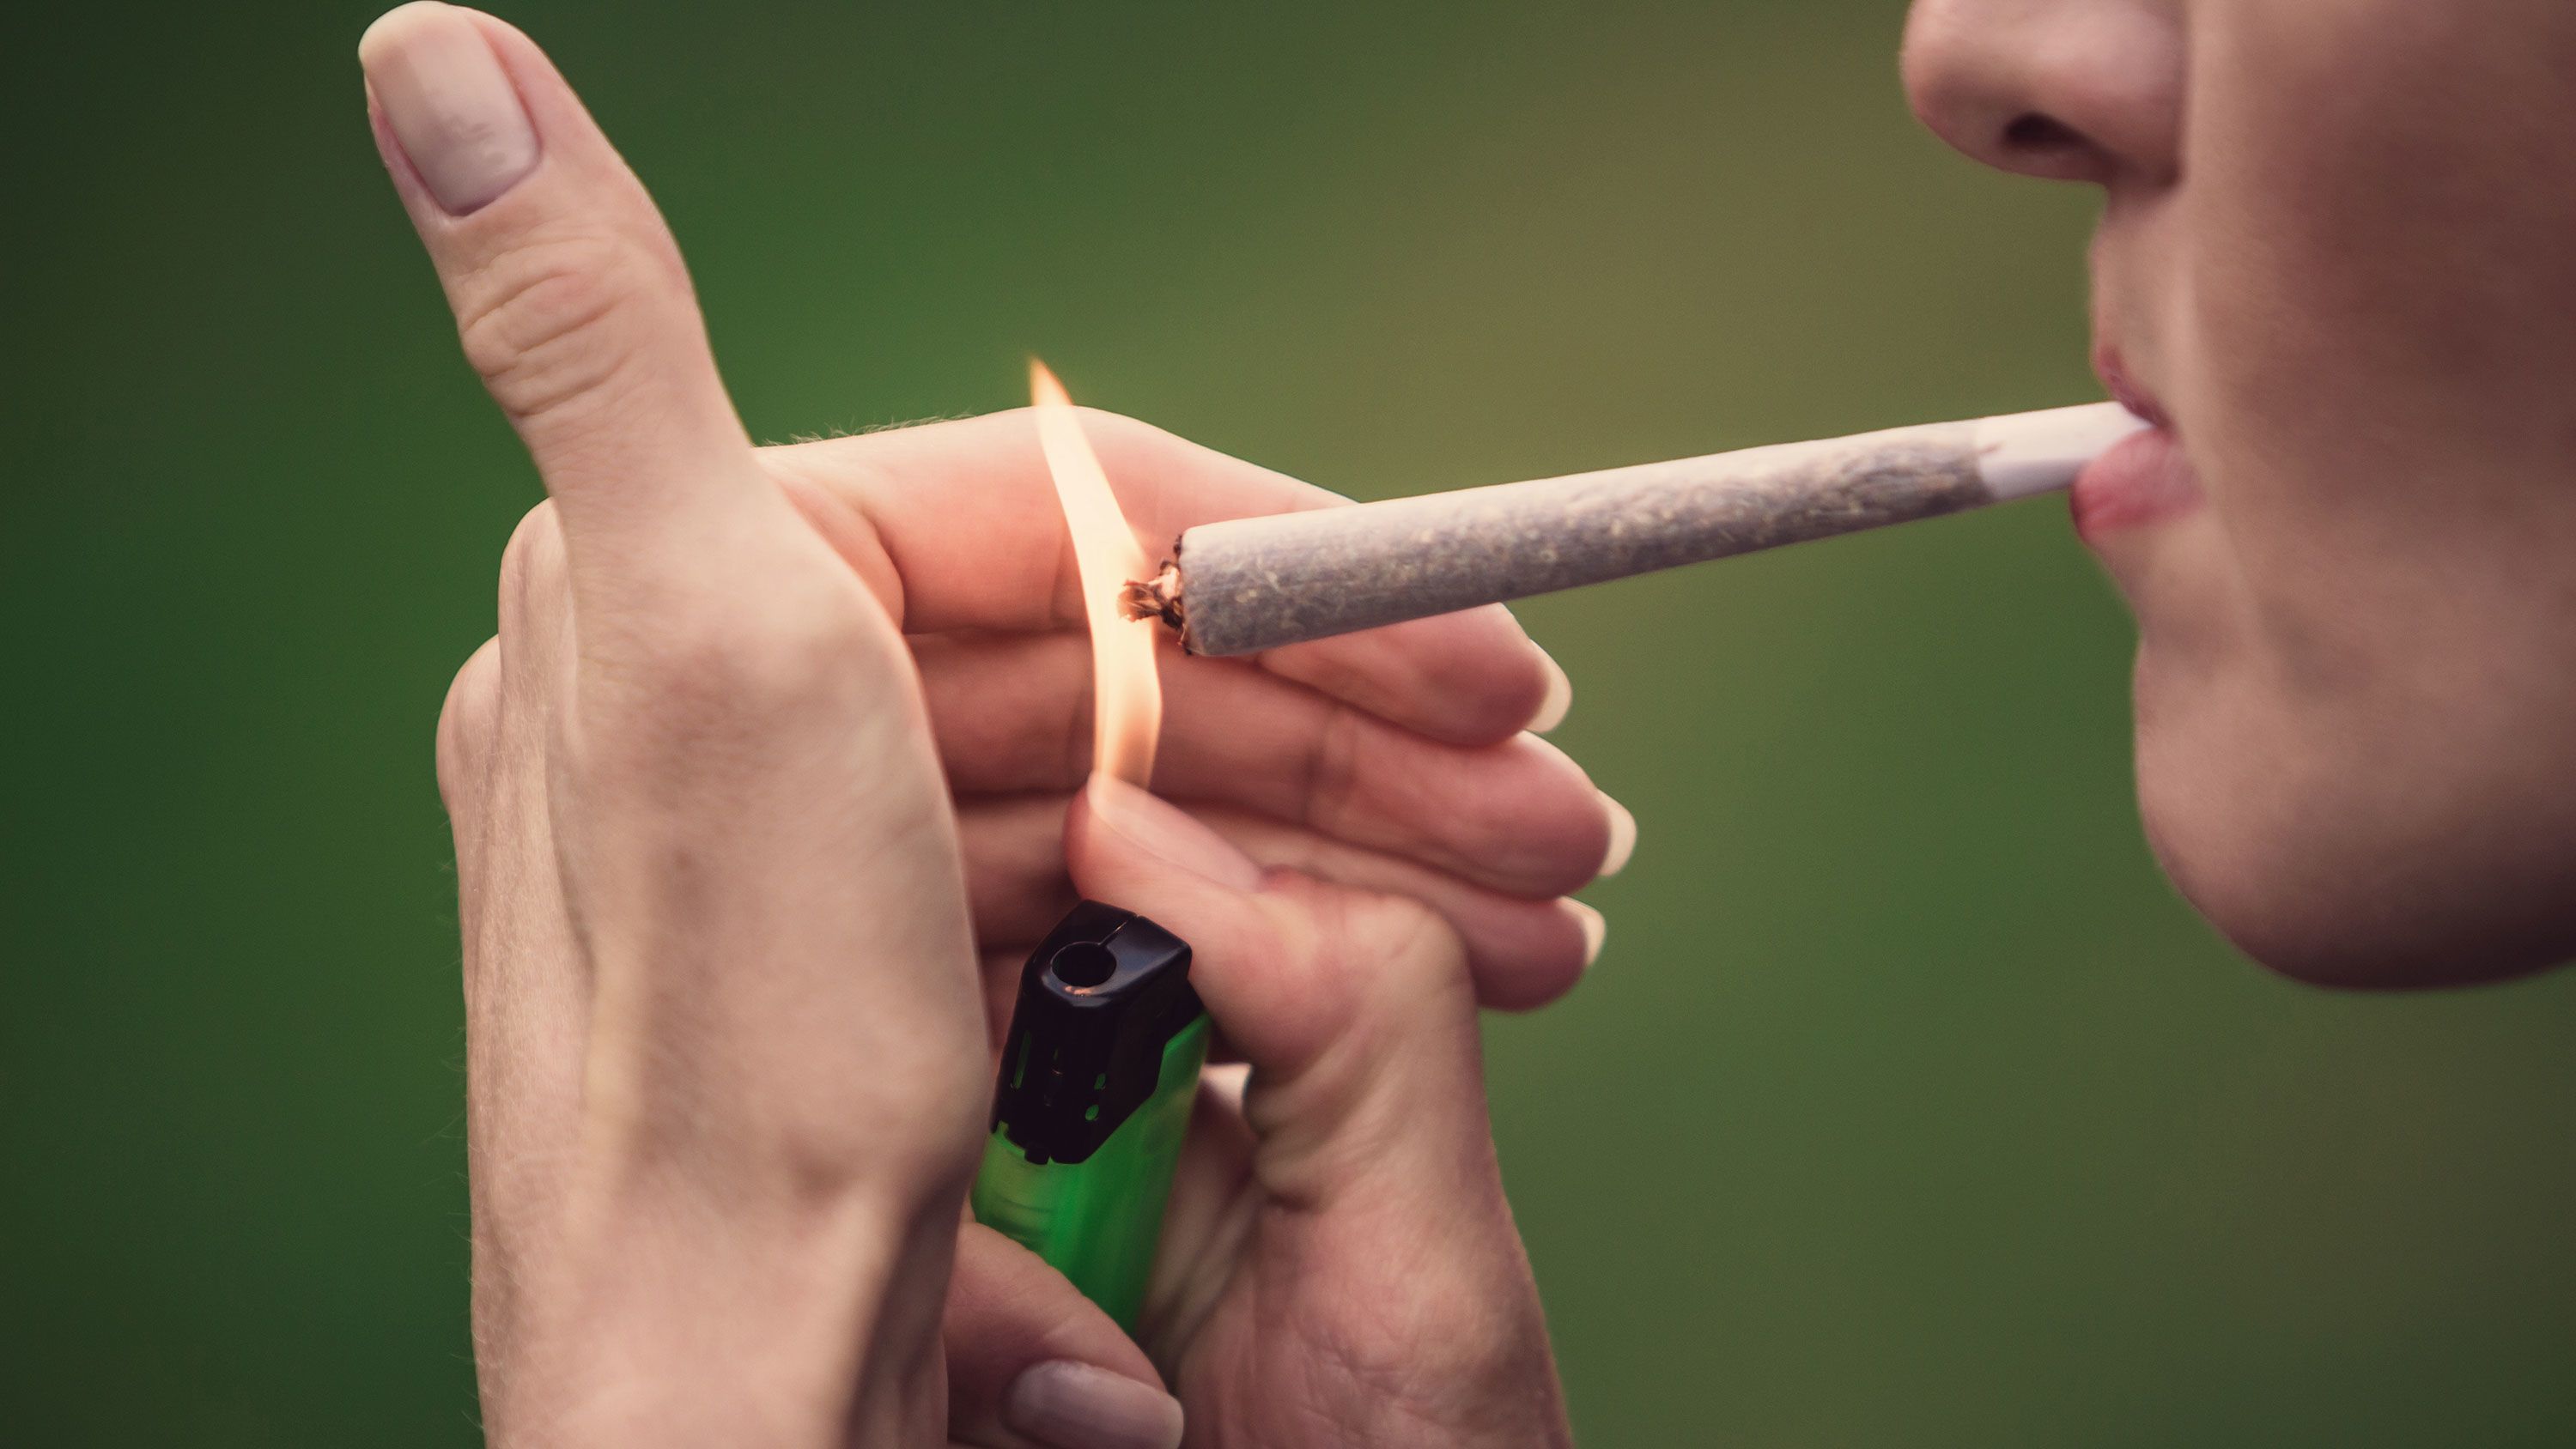 Secondhand marijuana smoke from bongs more dangerous than cigarette smoke